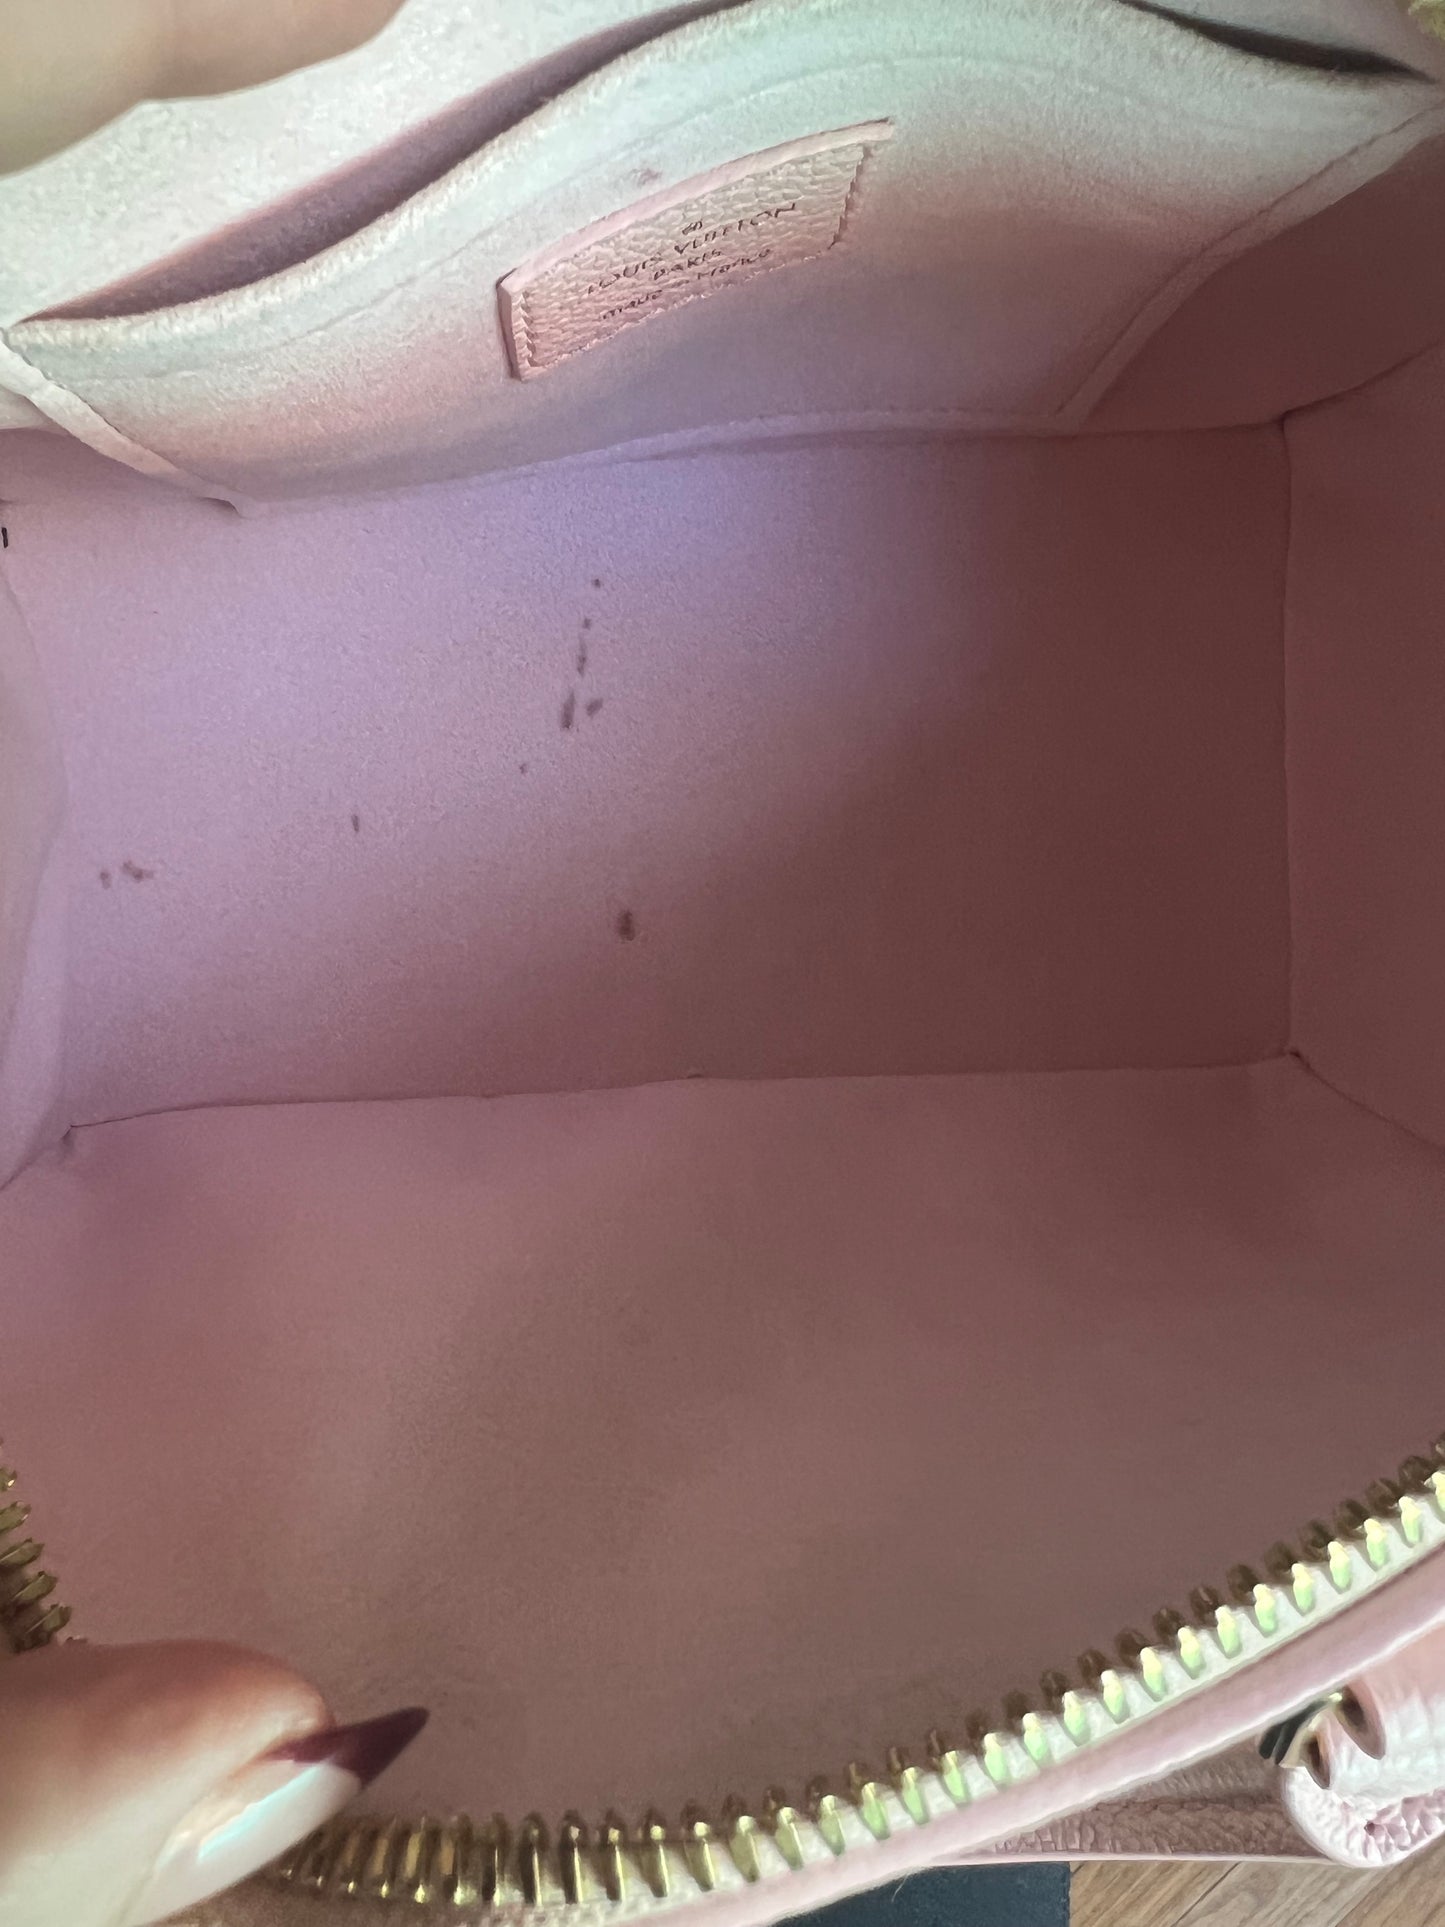 Louis Vuitton Degrade empreinte pink speedy 20 limited edition bag